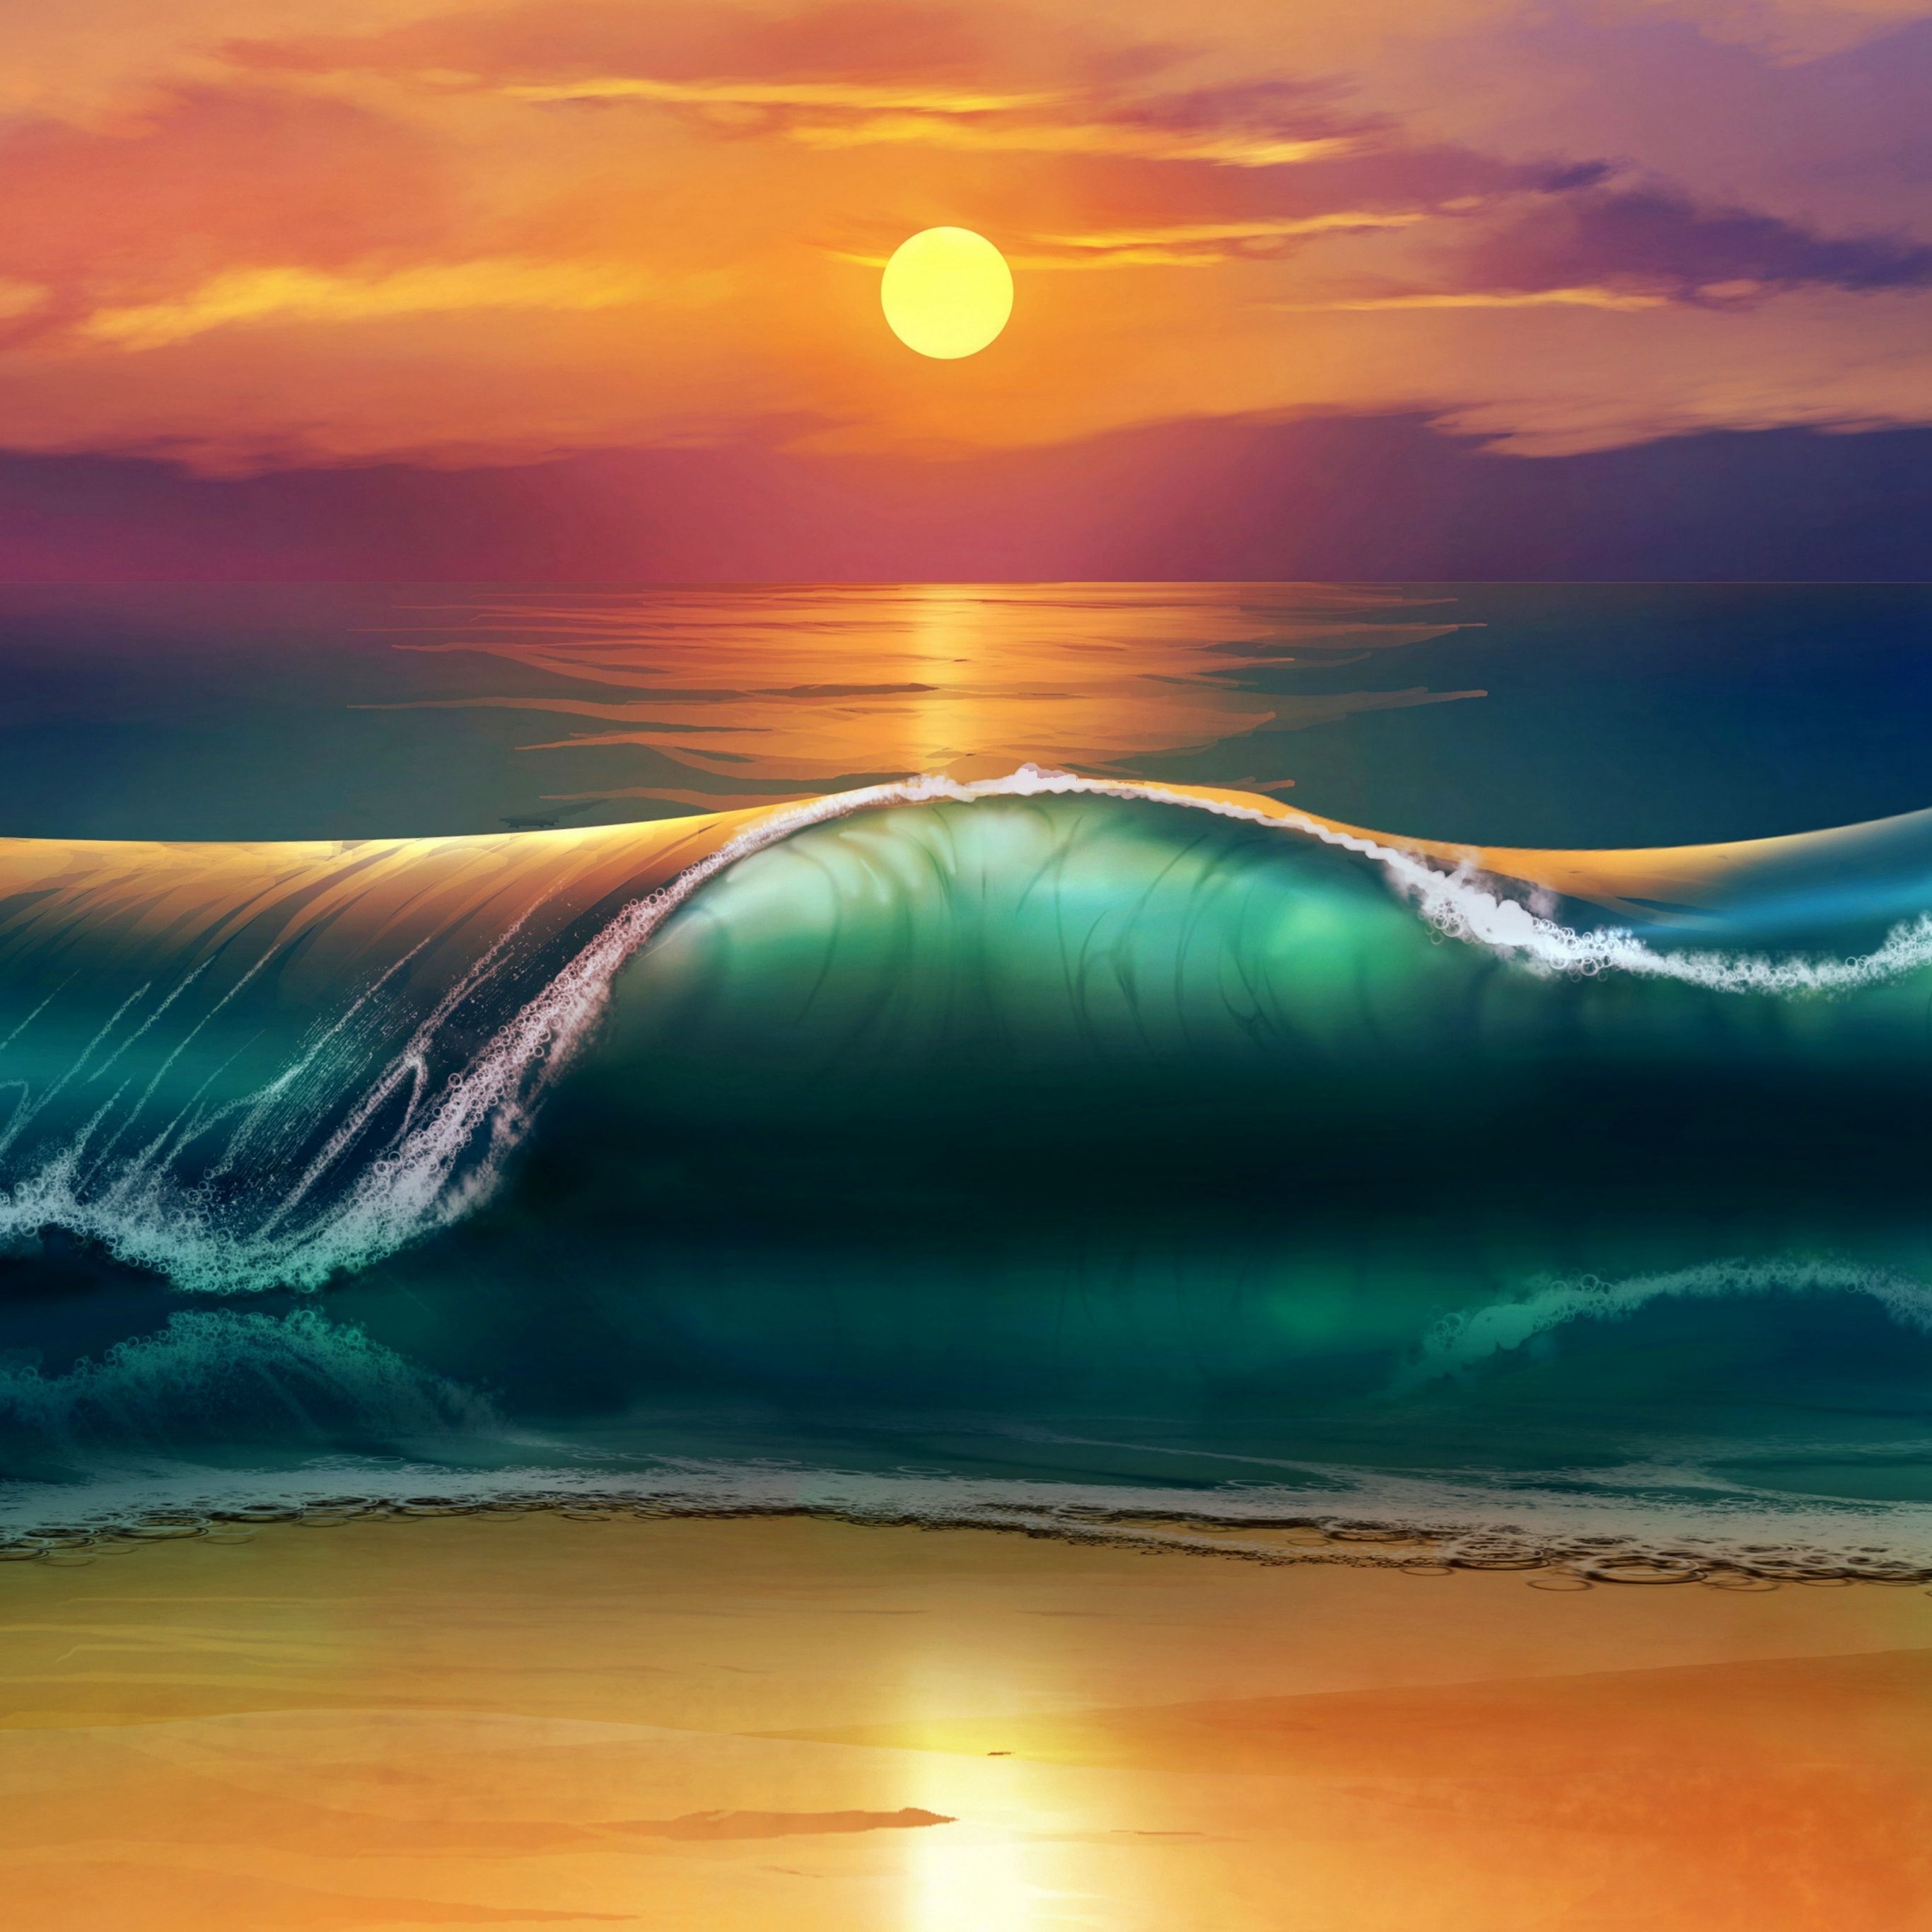 Art sunset beach sea waves iPad Pro Wallpaper Free Download